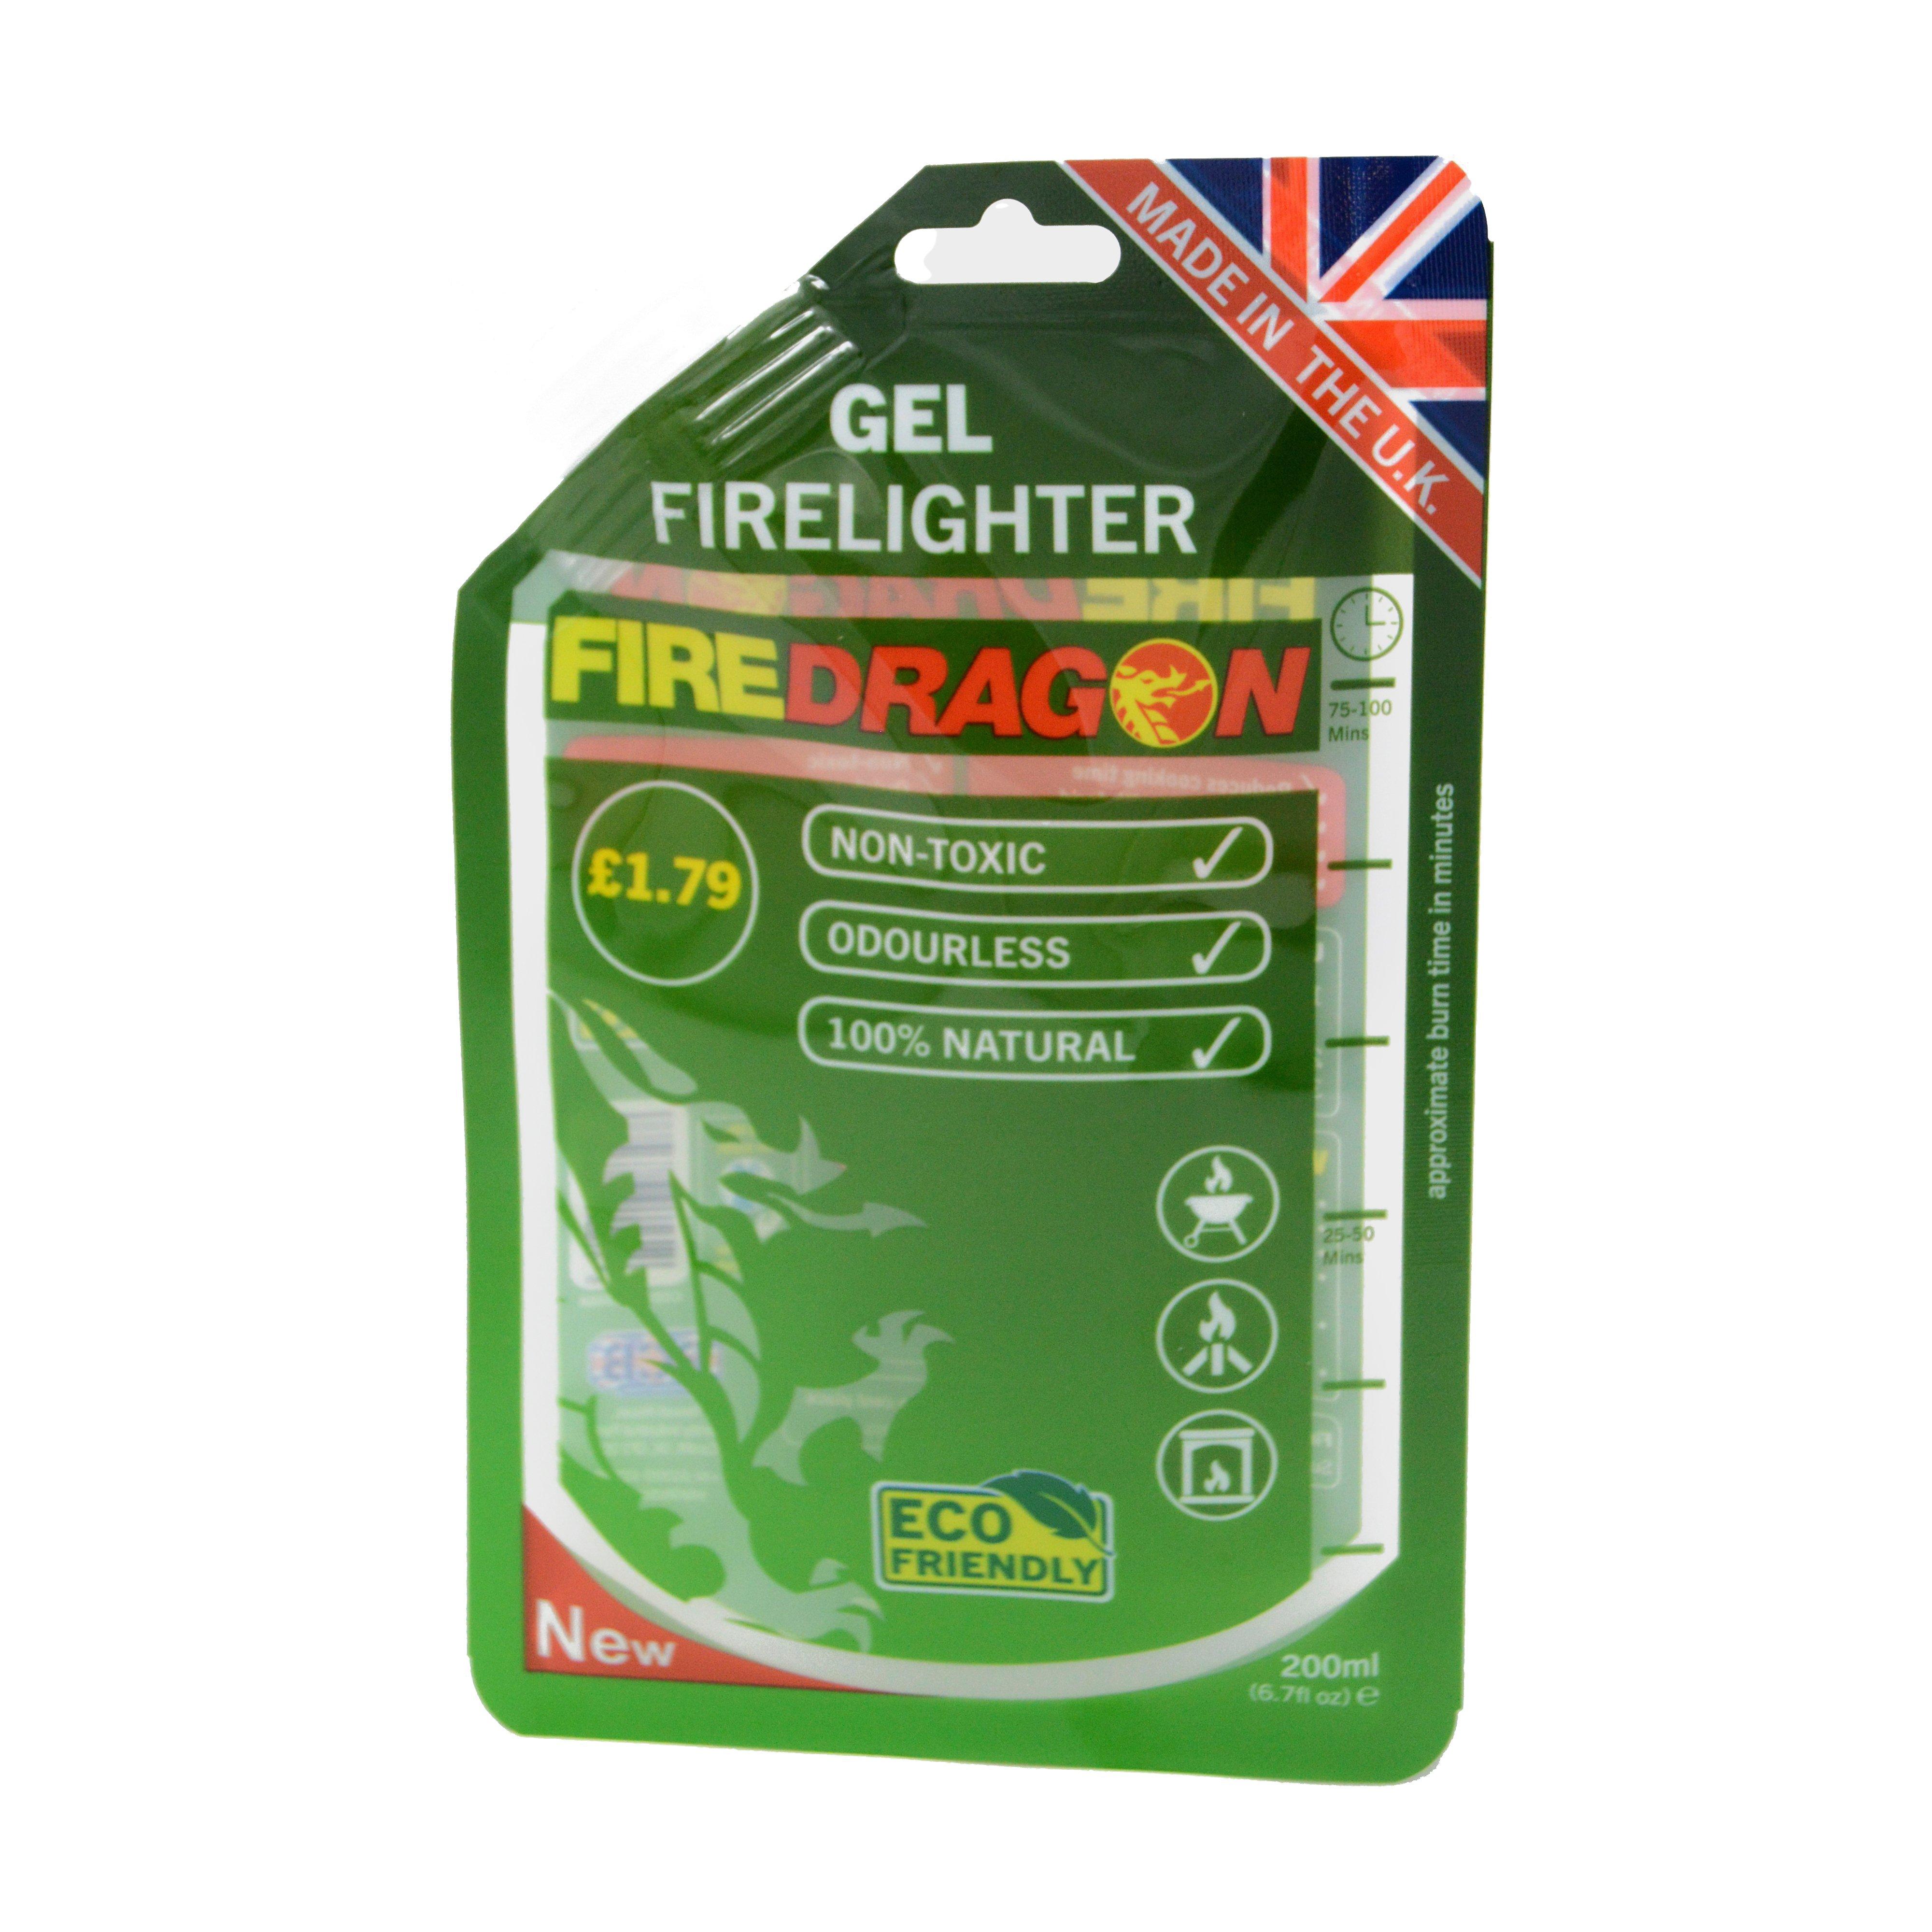 Fire Dragon Fuel Gel 200ml Review